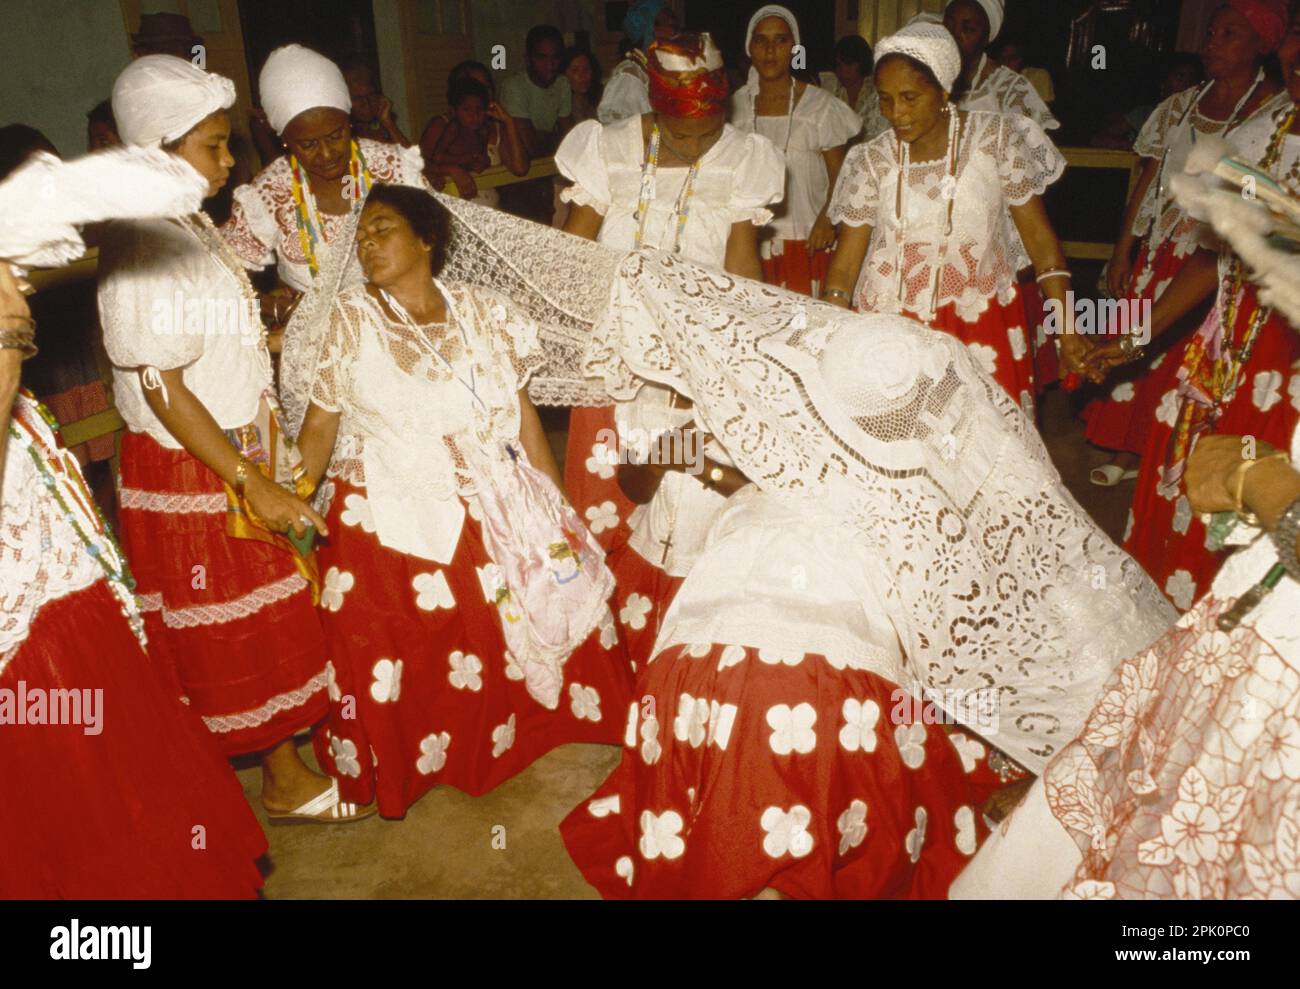 Tambor de Mina, syncretic Afro-Brazilian spirit possession religion. Two cult members (filhas de santo) in trance are covered with a ritual cloth Stock Photo